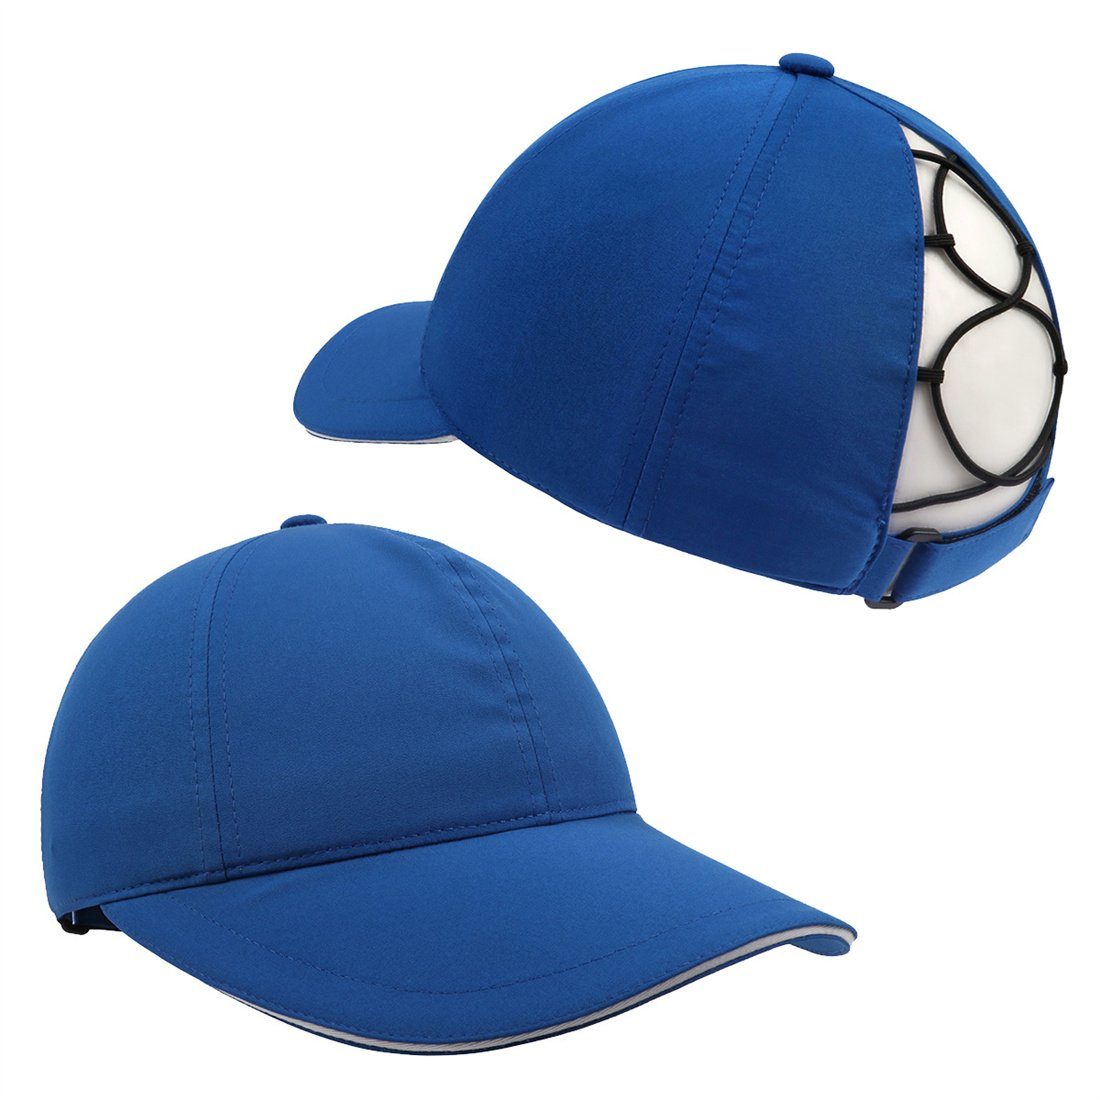 DÖRÖY Baseball Cap Outdoor-Baseballkappe für Frauen,schnell trocknende Kappe,Sonnenblende blau